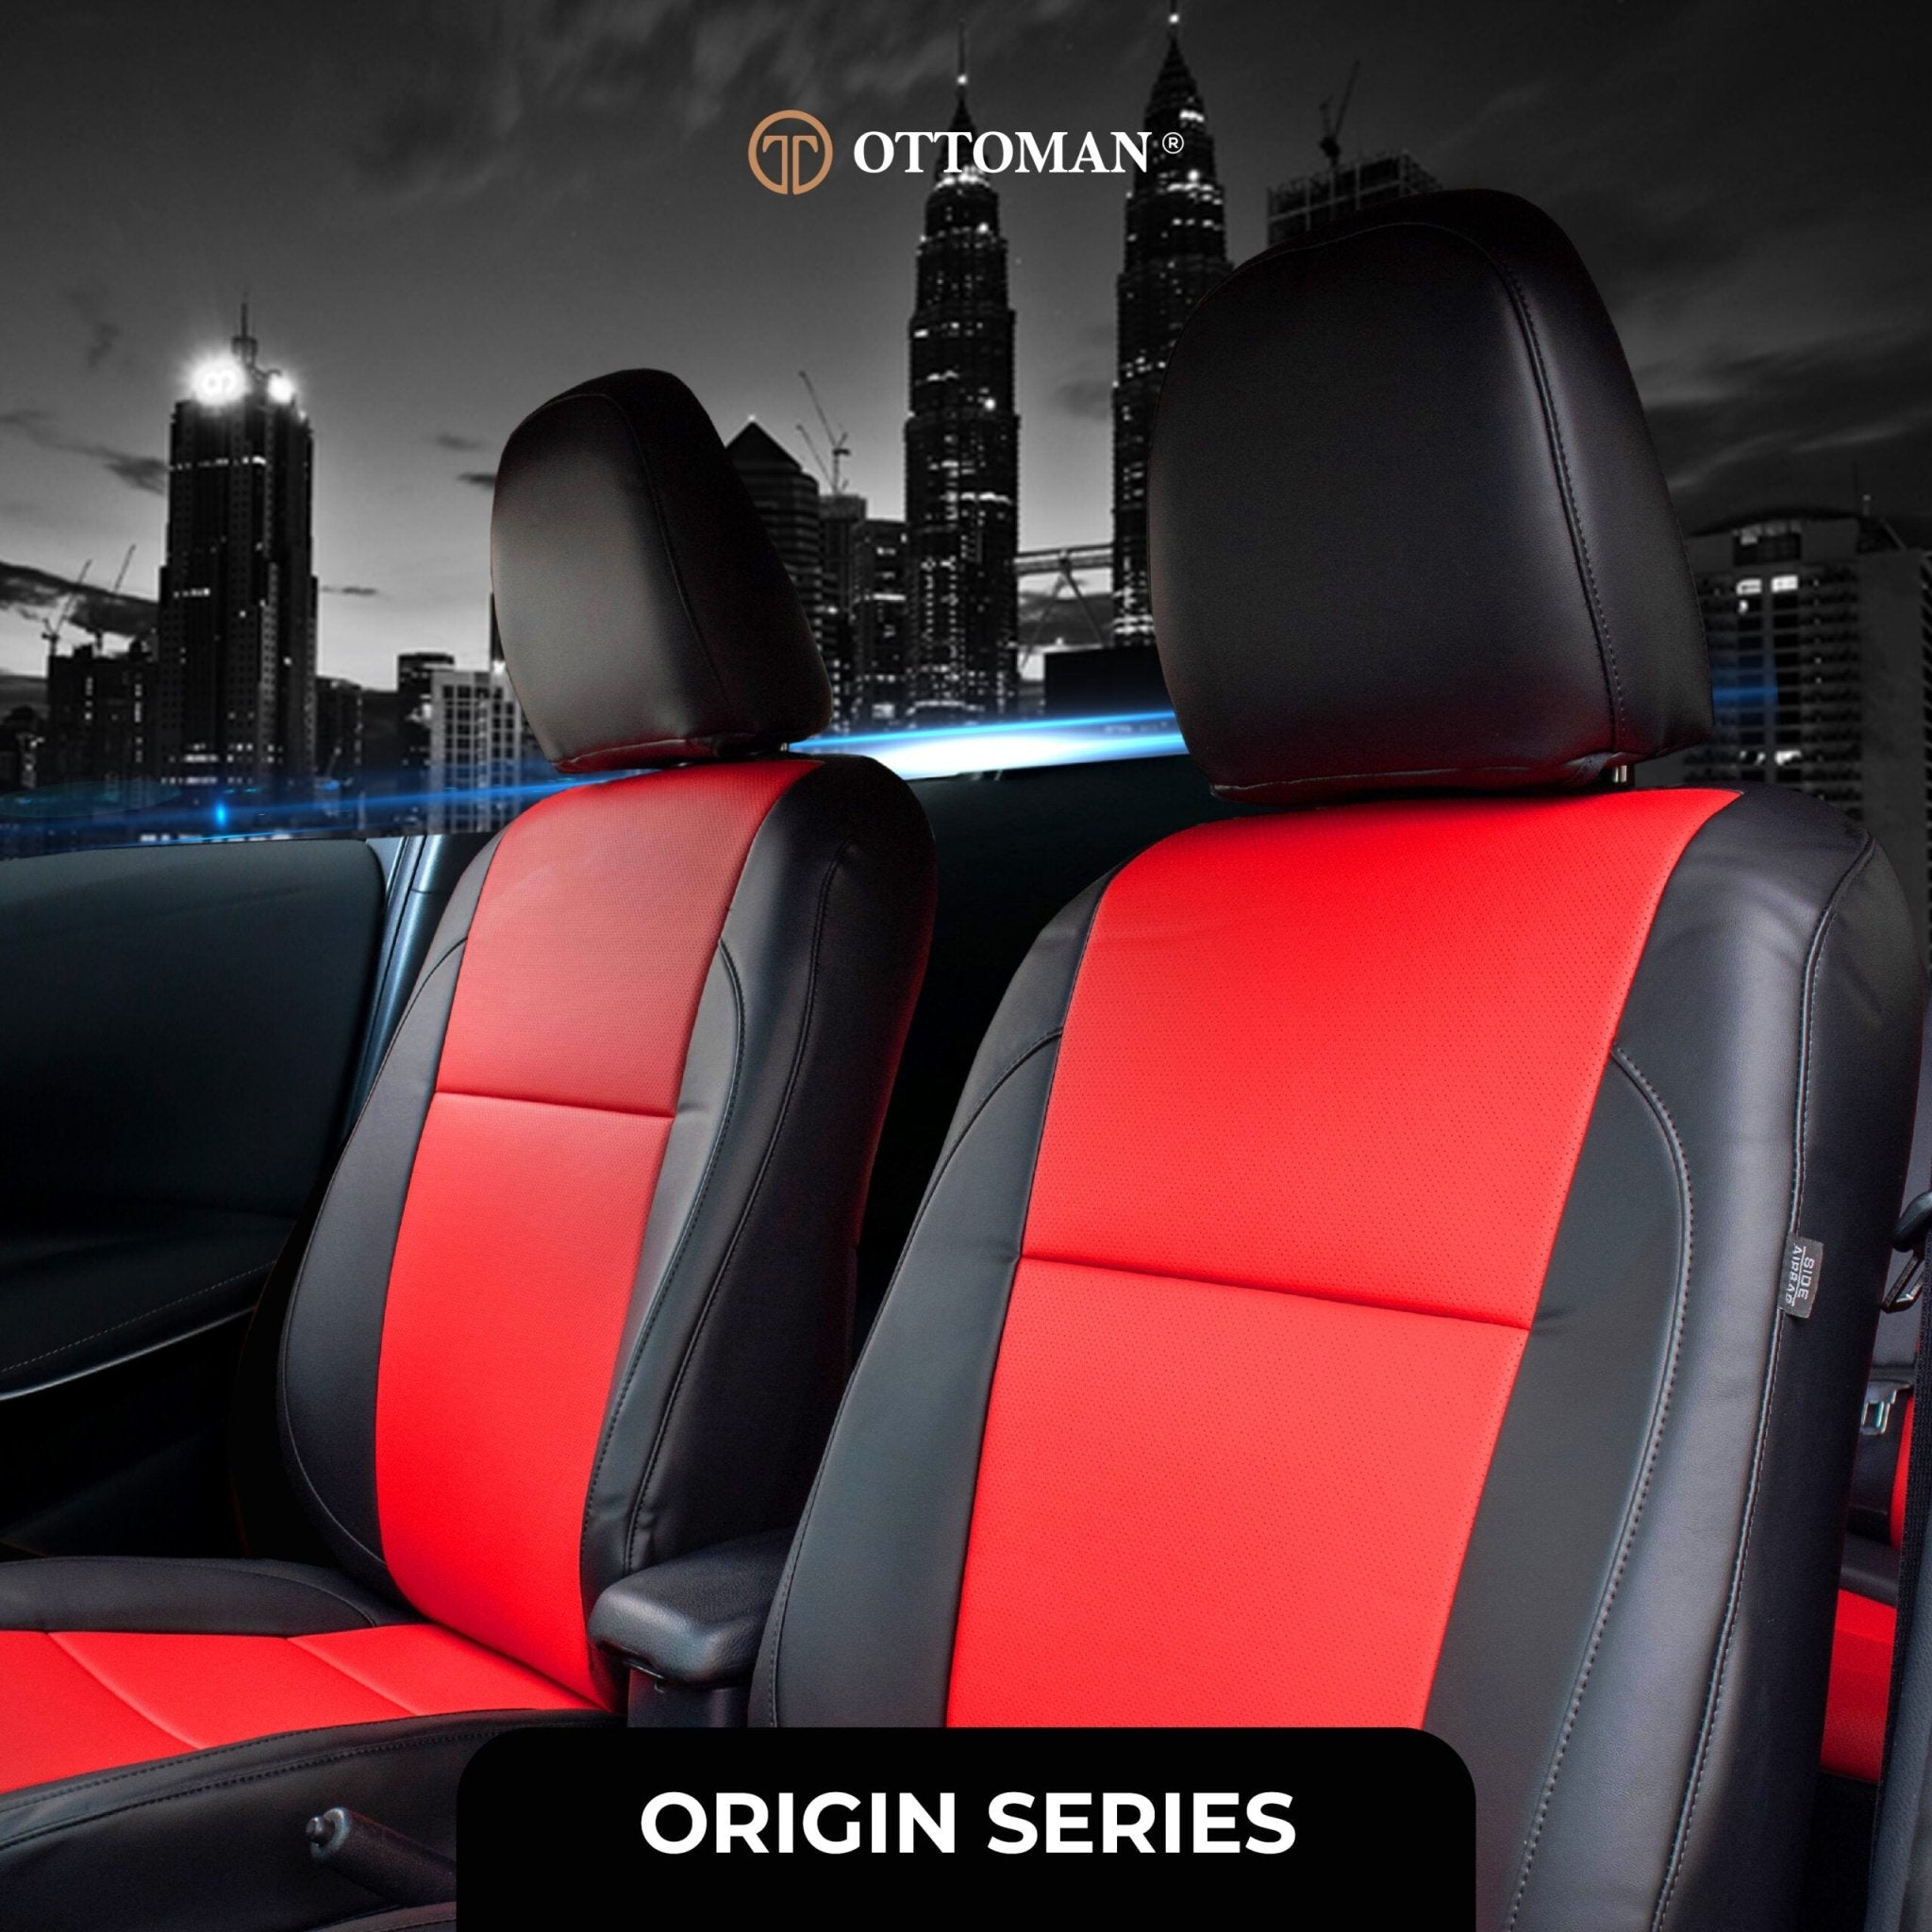 Honda BRV (2016-Present) Ottoman Seat Cover Seat Cover in Klang Selangor, Penang, Johor Bahru - Ottoman Car Mats